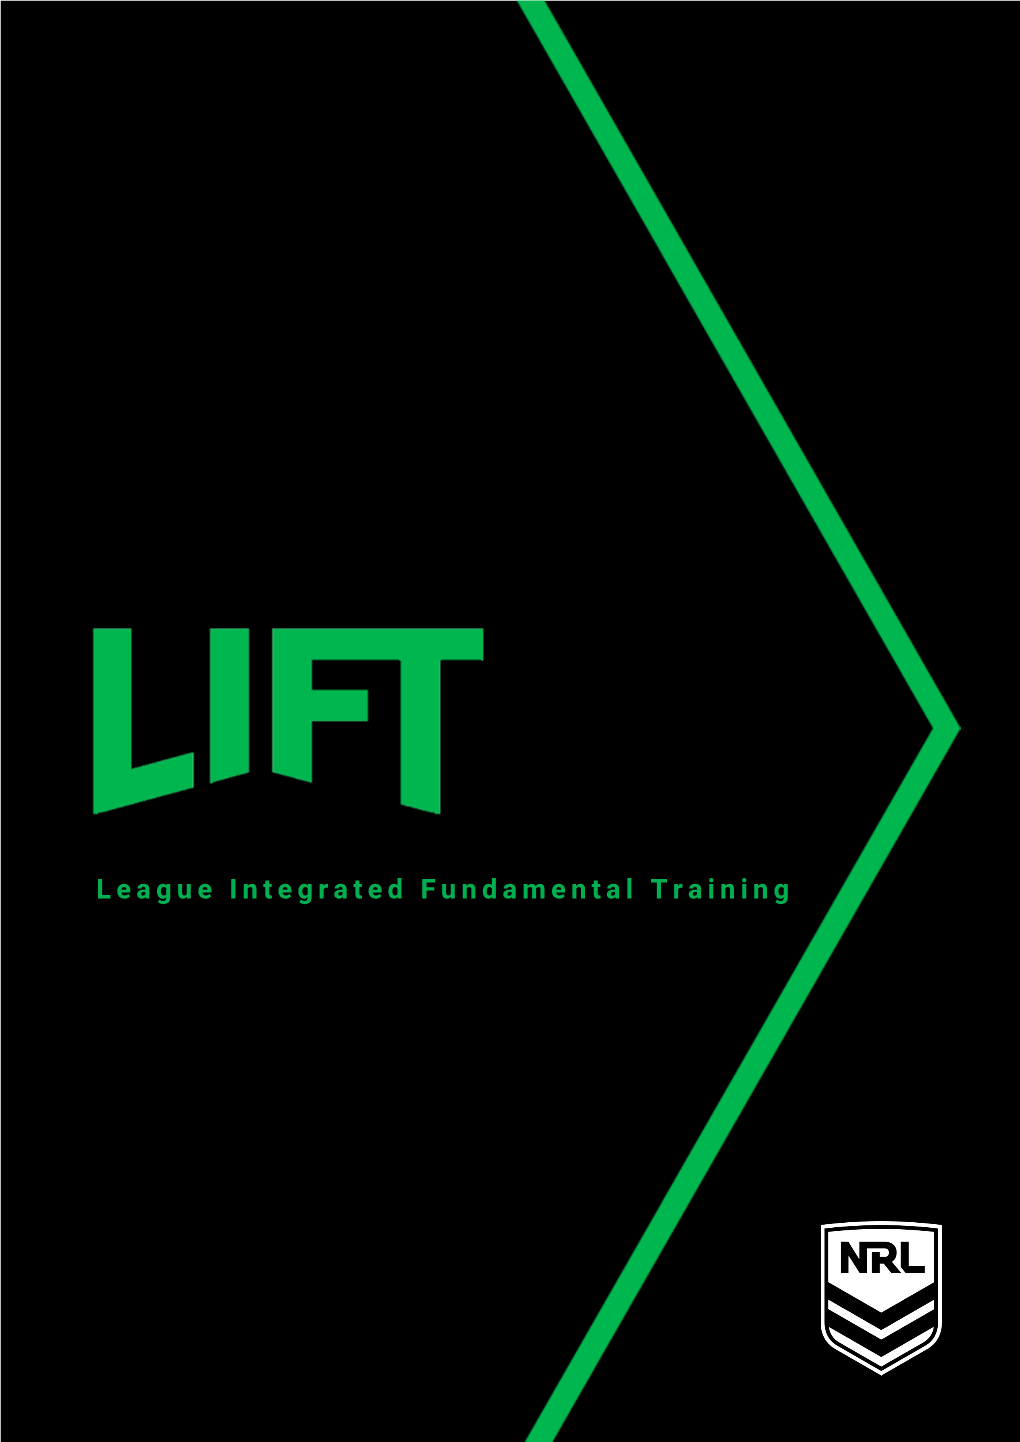 League Integrated Fundamental Training Rationale